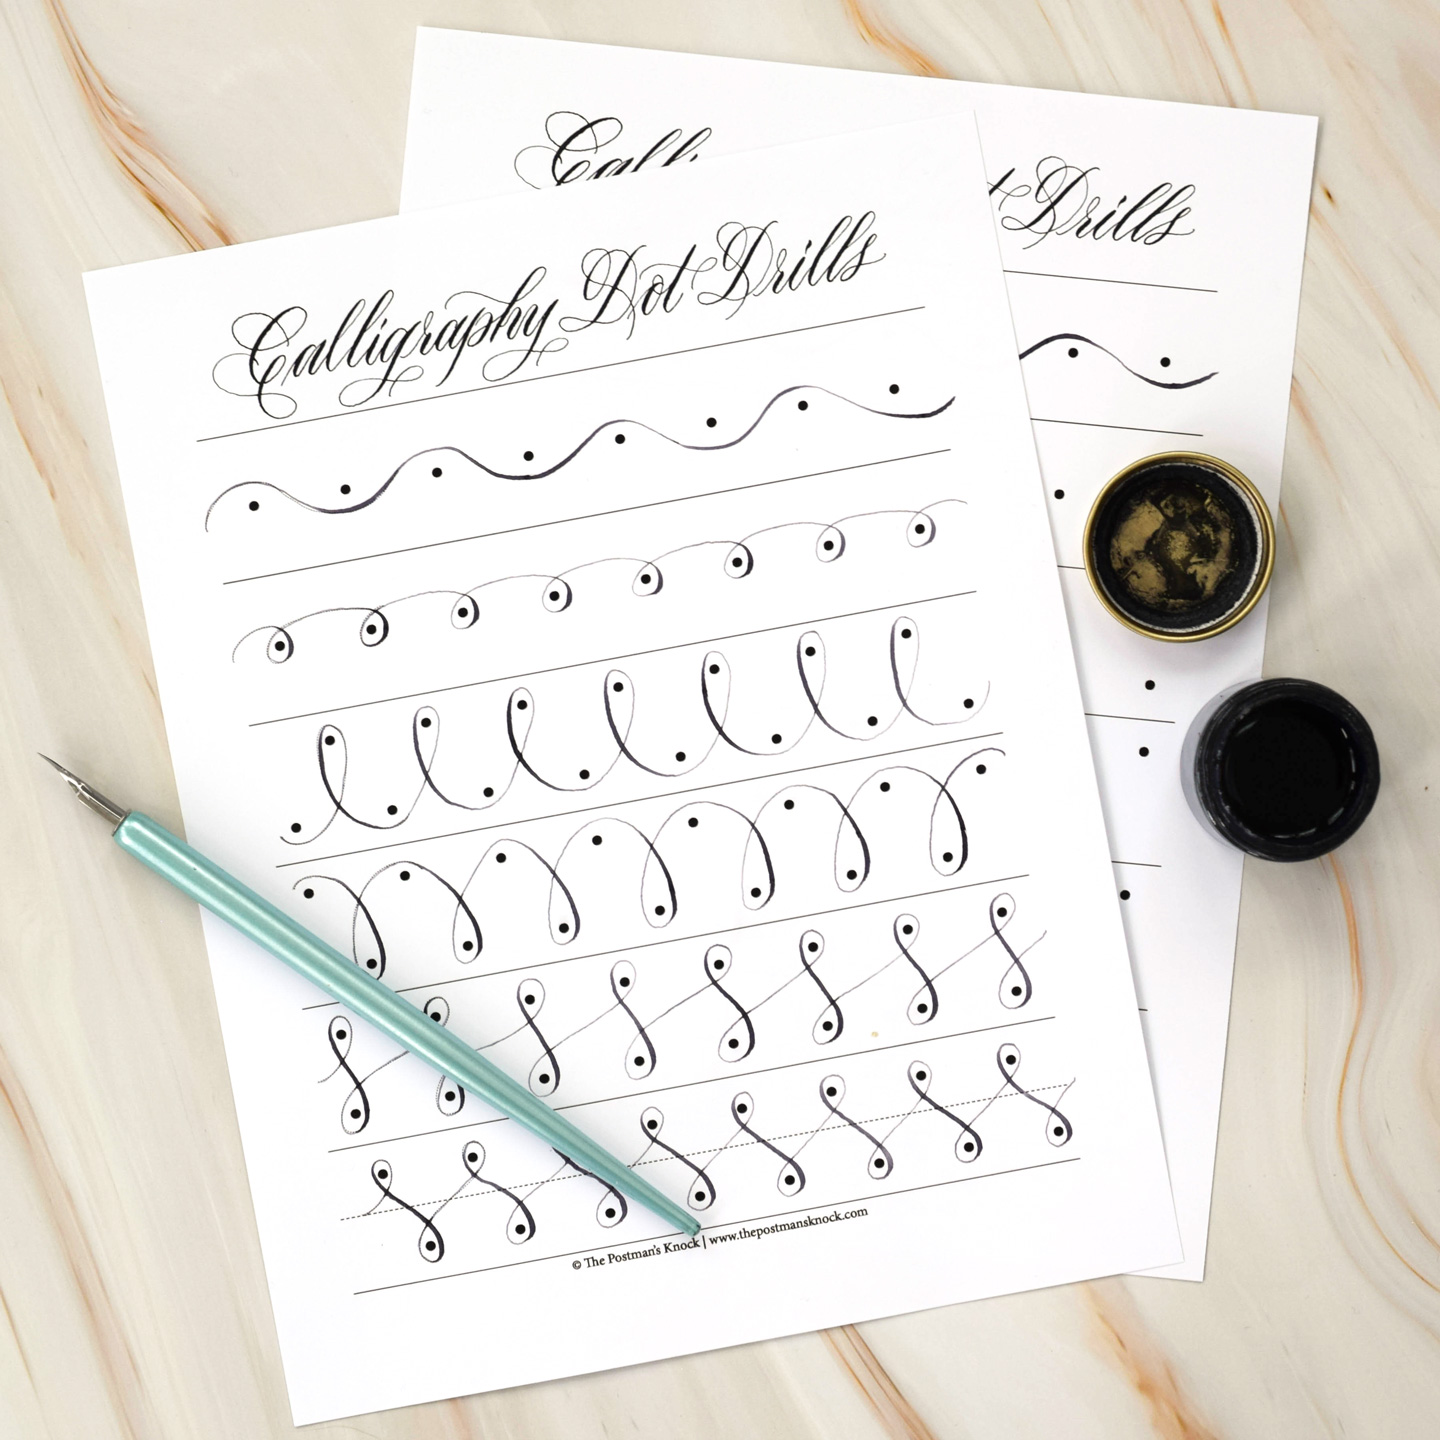 Calligraphy Dot Drills Printable Worksheet – The Postman's Knock